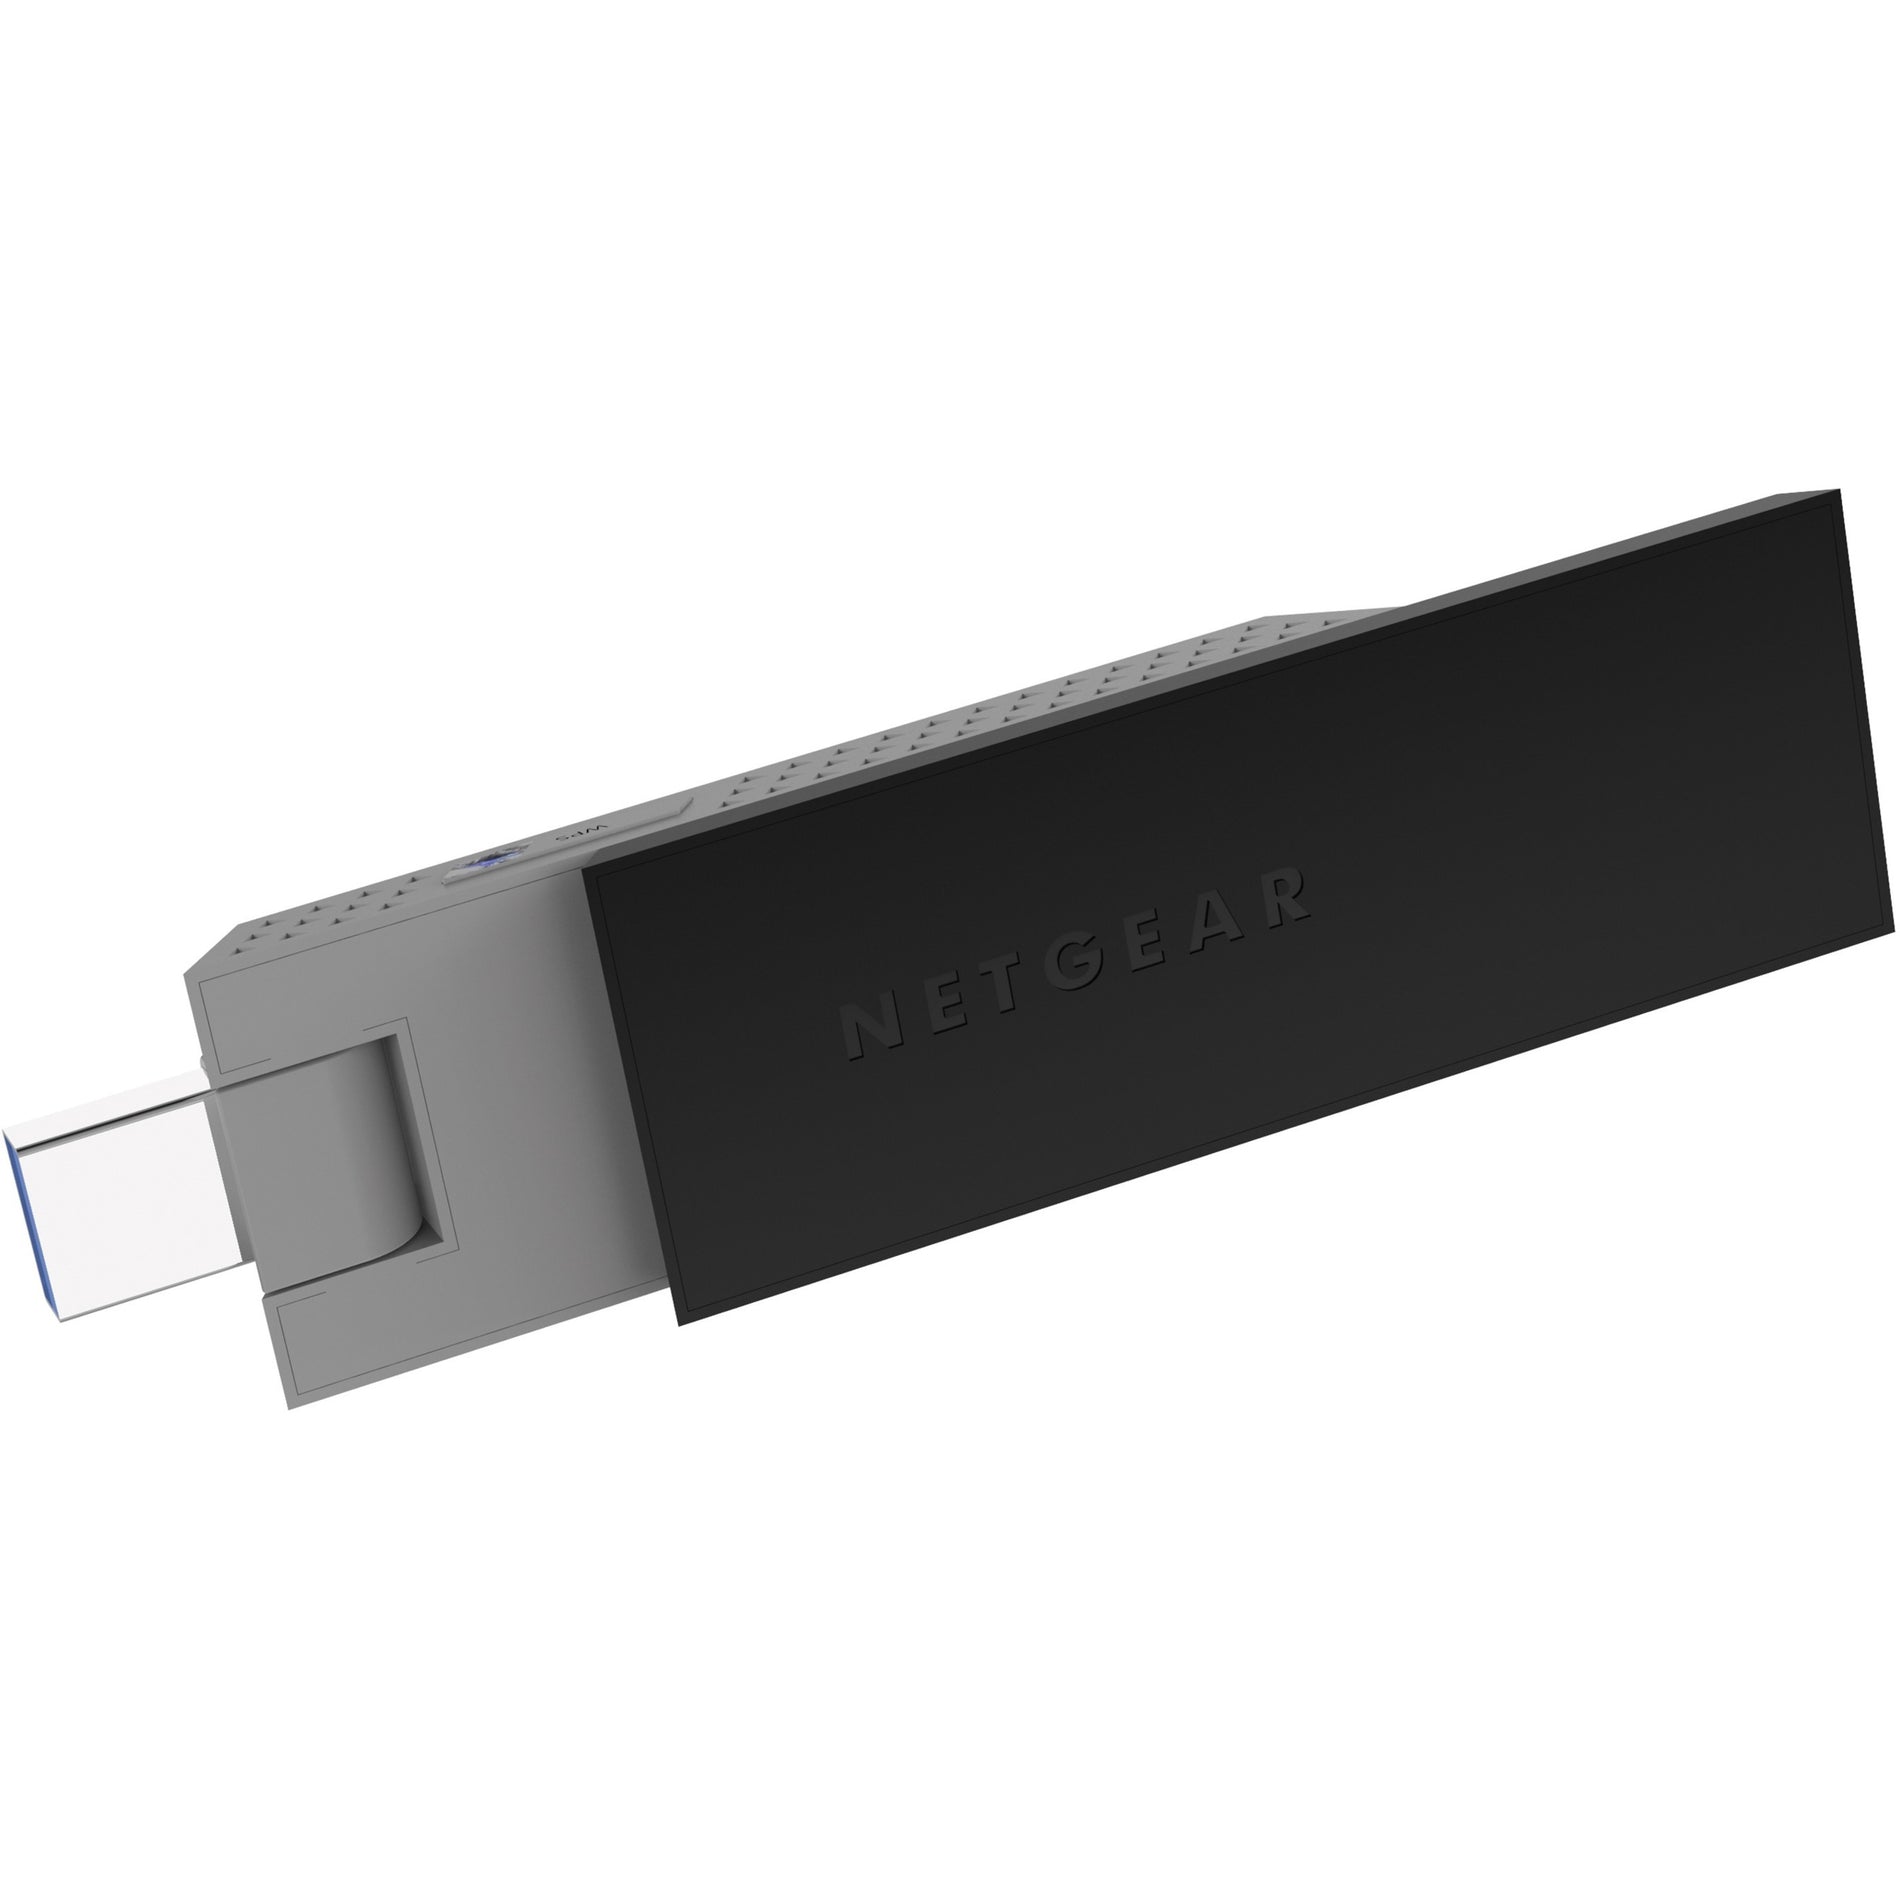 Netgear A6210-100PAS AC1200 WiFi USB 3.0 Adapter, Dual Band, High Gain, 1.17 Gbit/s